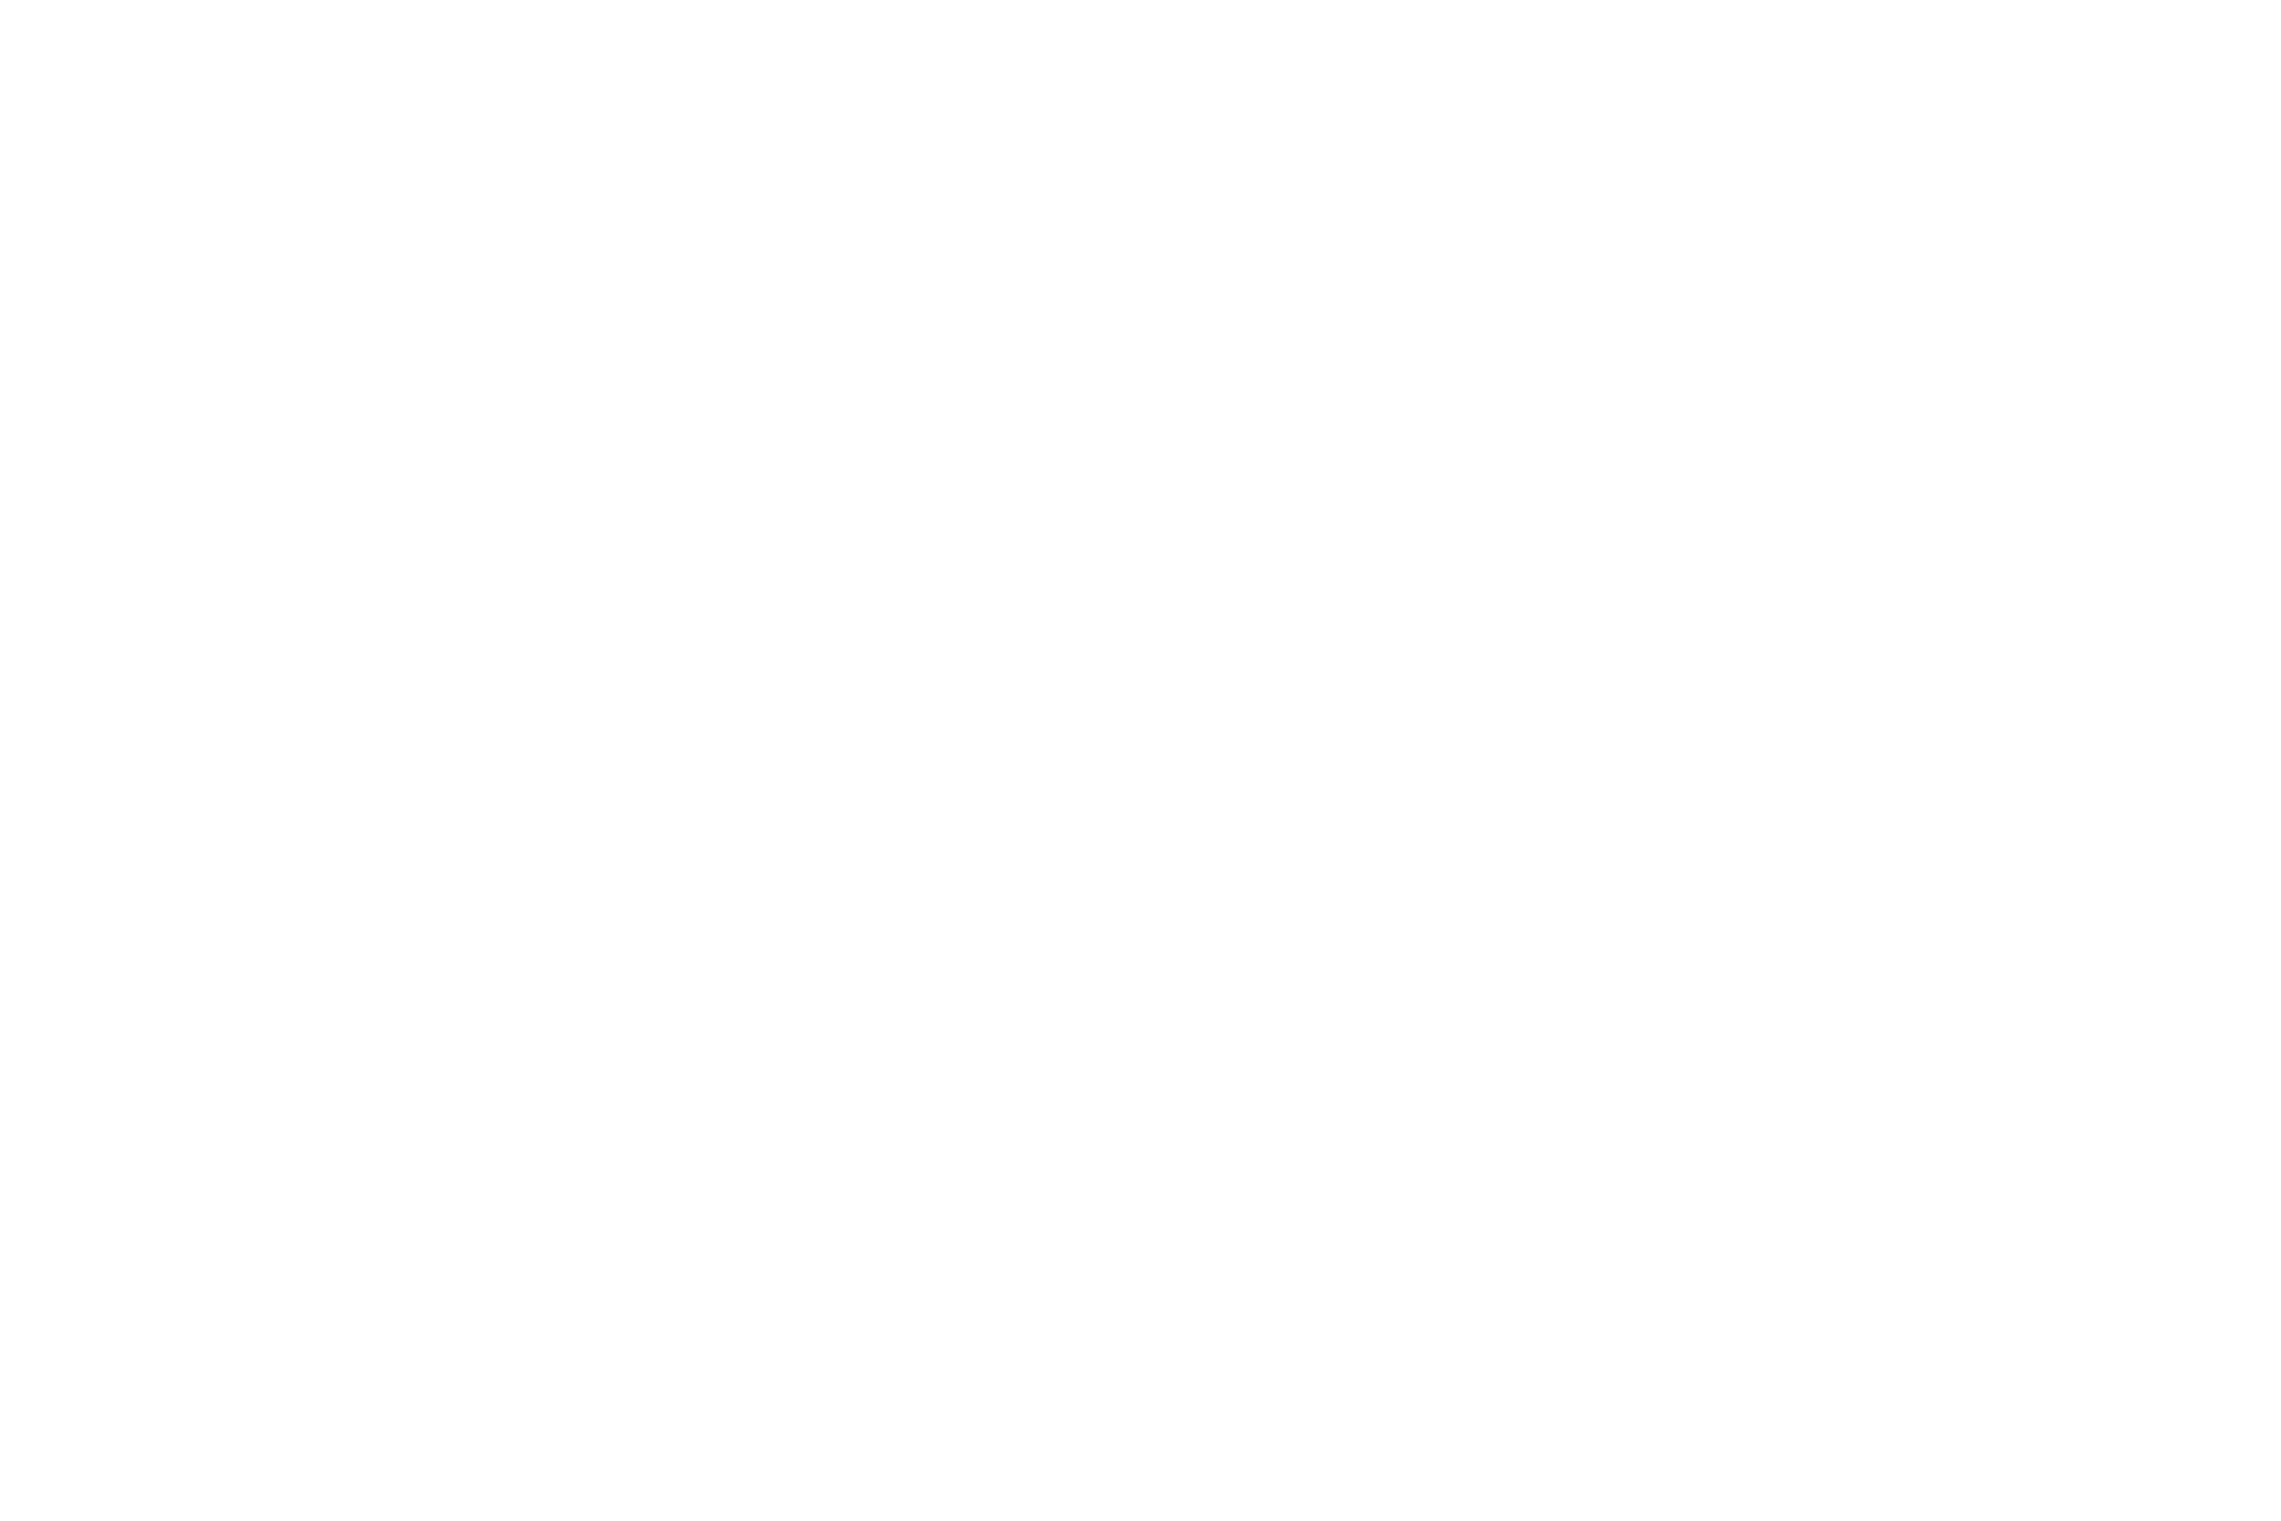 Danielle Levitt photography studio portrait of man smiling against black backdrop wearing Nike logo sportswear jacket and beanie